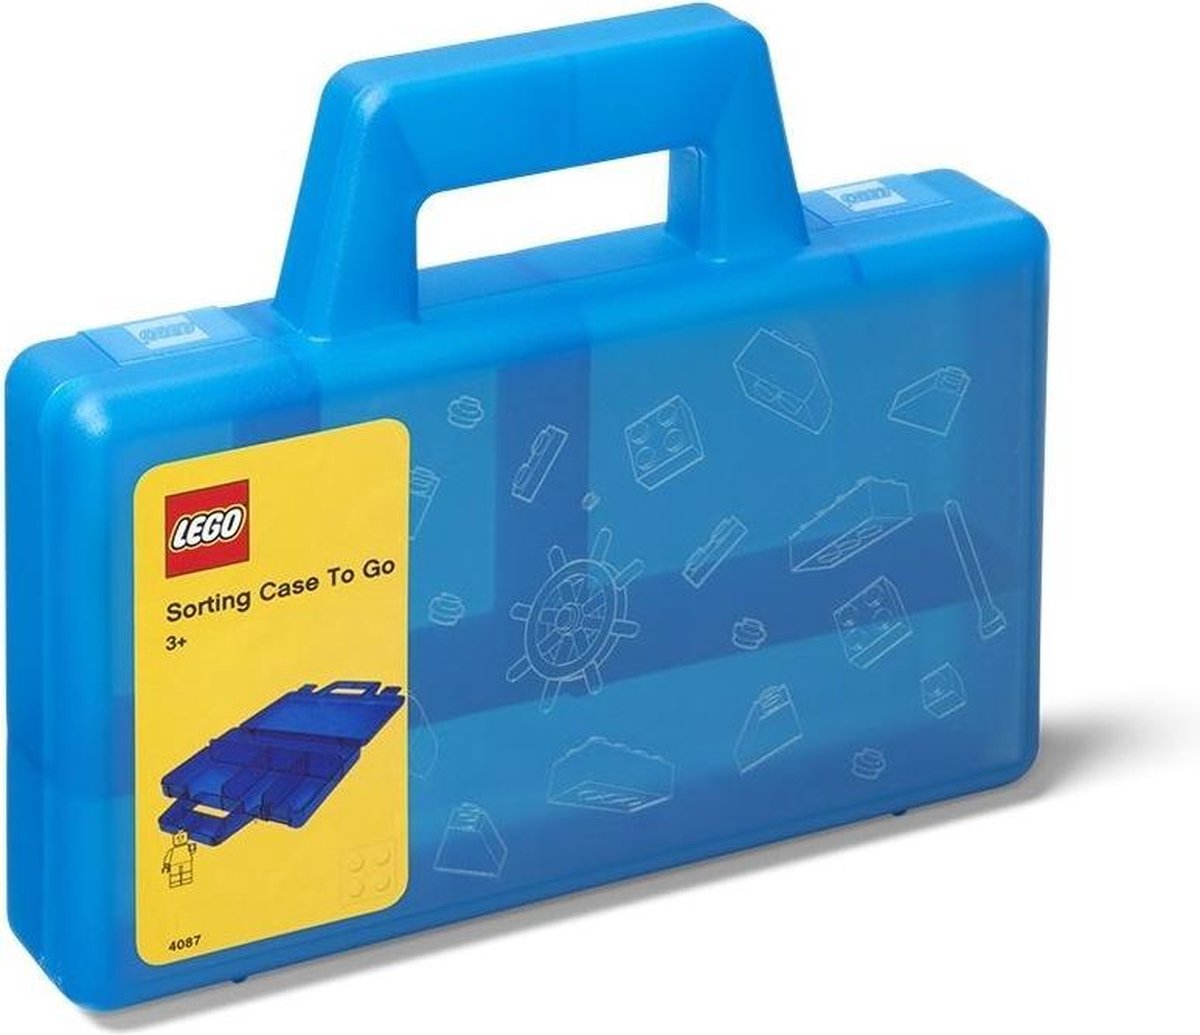 Sorteerkoffer To Go, Blauw - LEGO